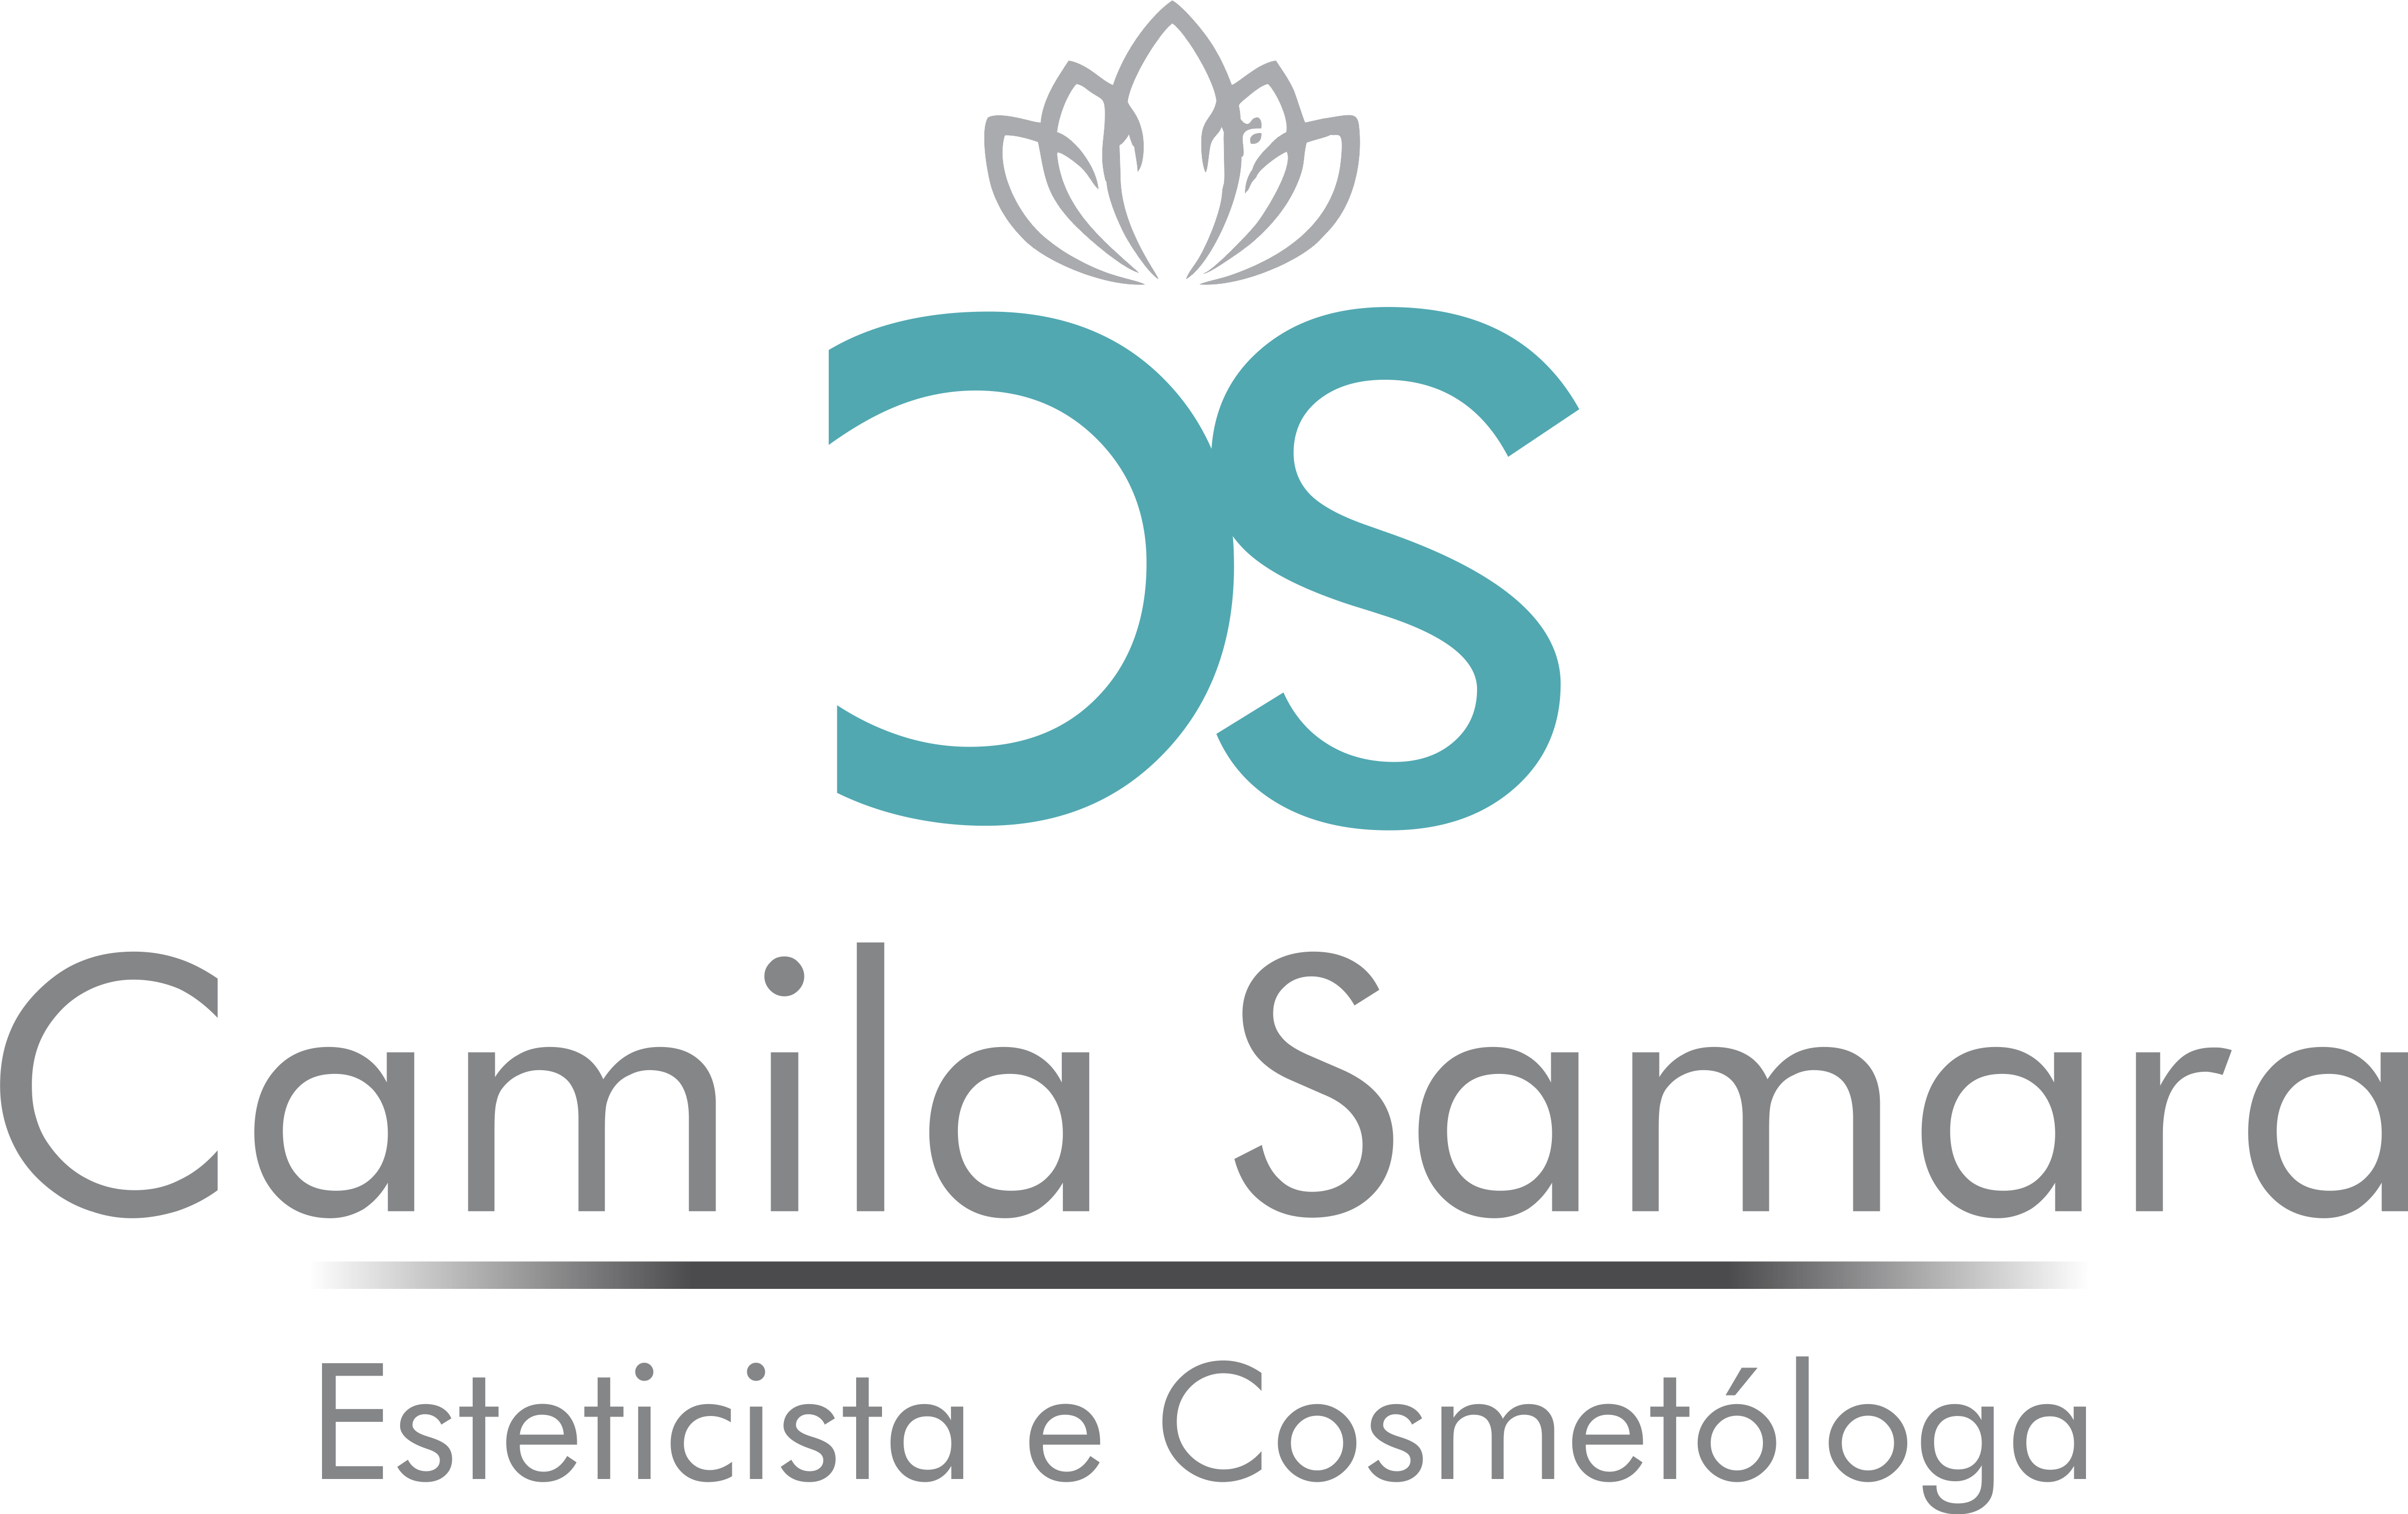 Camila Samara Esteticista e Cosmetologa